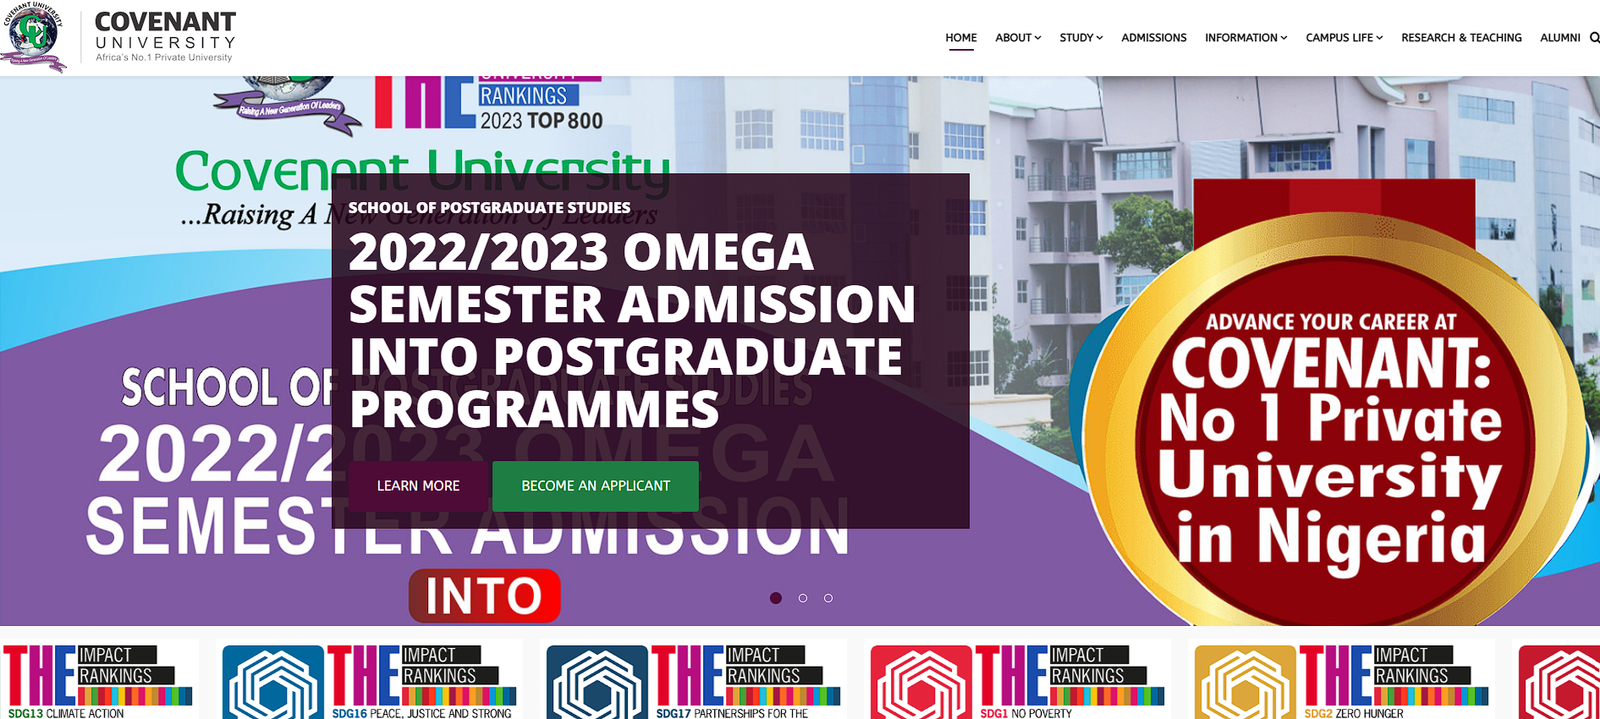 Best private universities in Nigeria - Covenant University